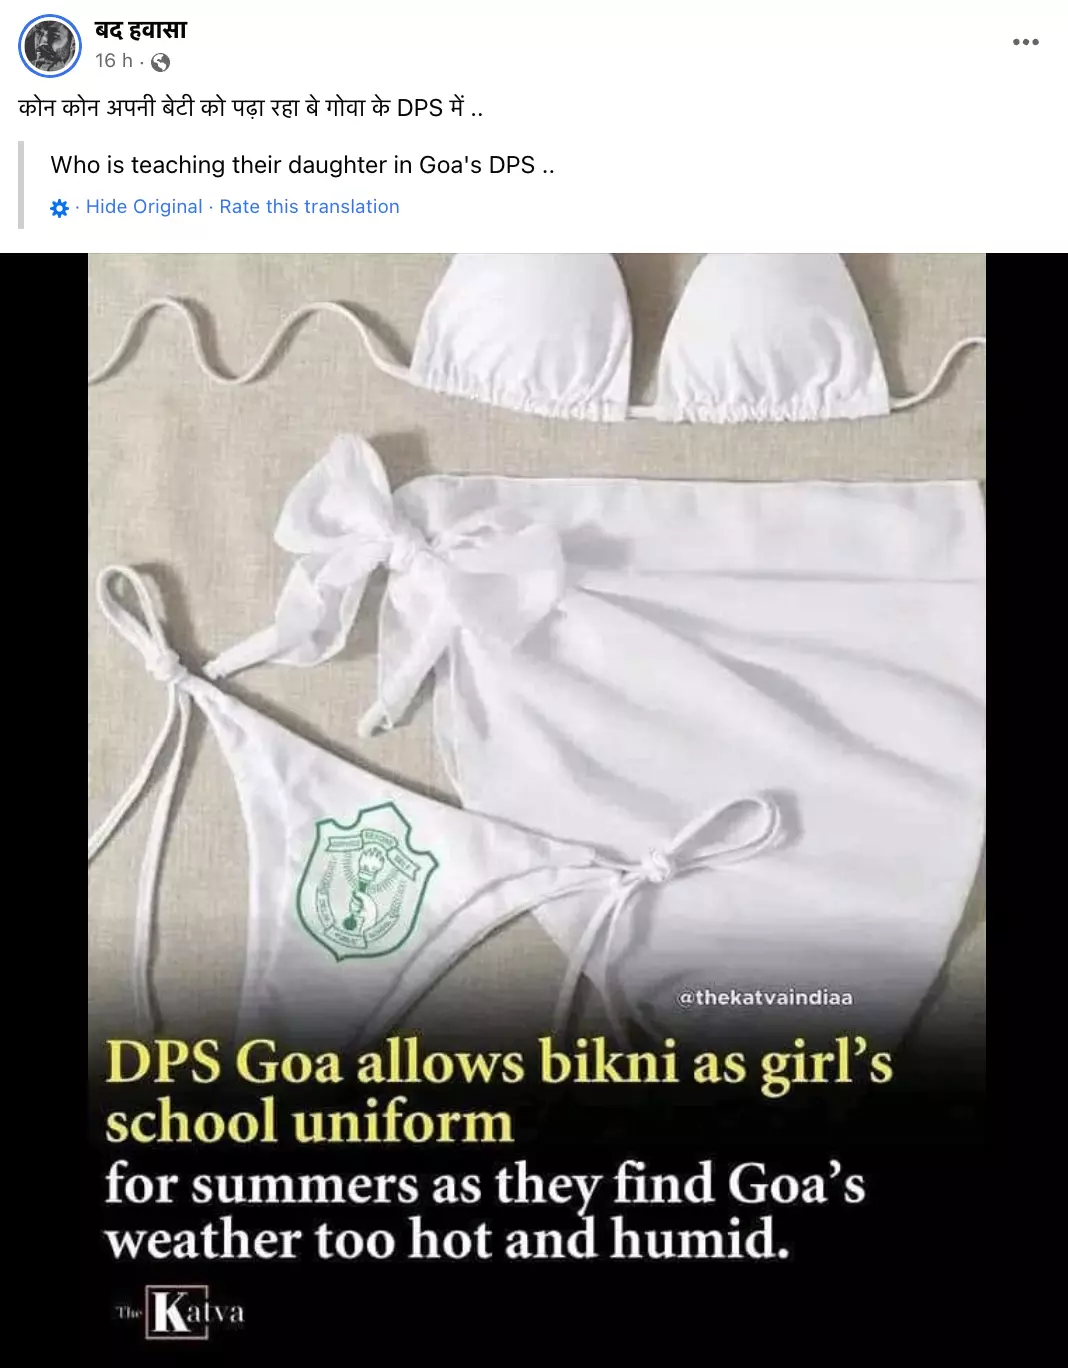 Hindu Purahit V S School Girl Hot Sex - Viral Post Claiming DPS Goa Allows Girls To Wear Bikini In School Is Satire  | BOOM